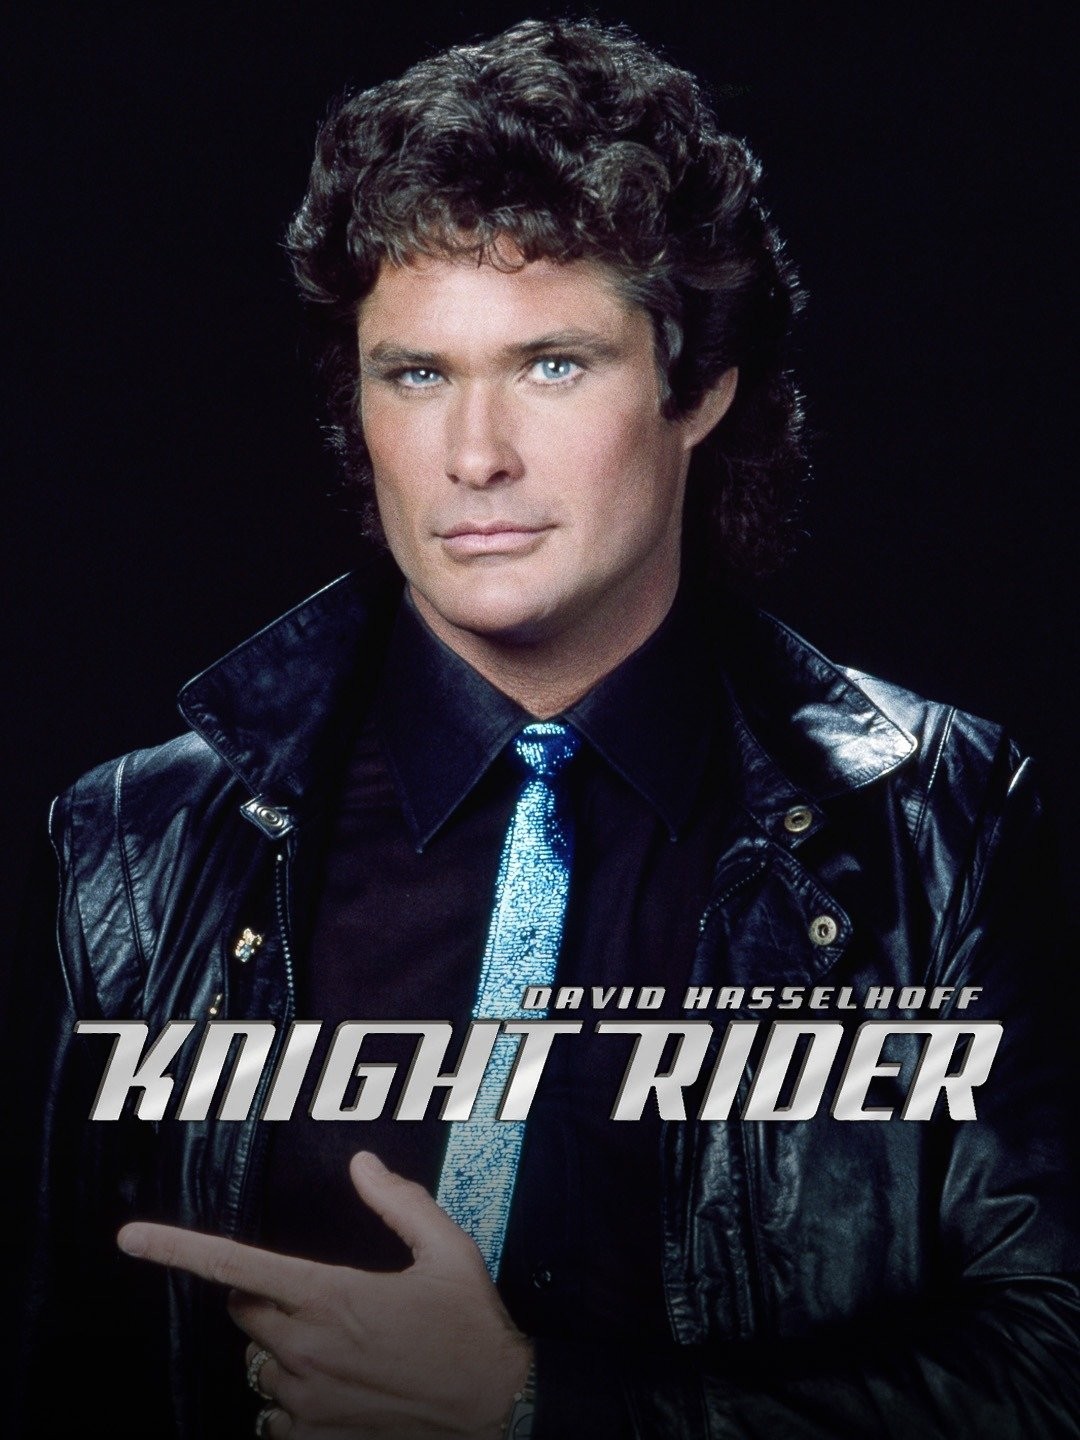 knight rider tv series